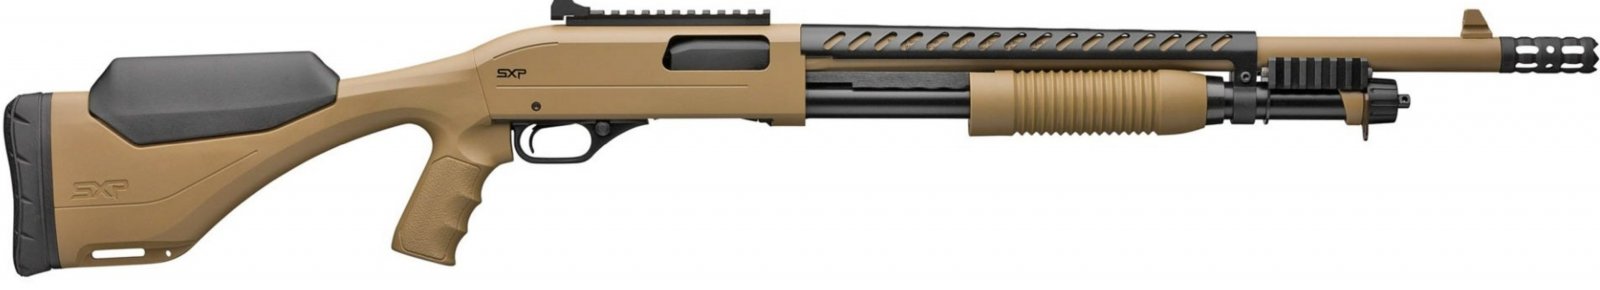 Winchester sxp defender fde with pistol grip a.jpg